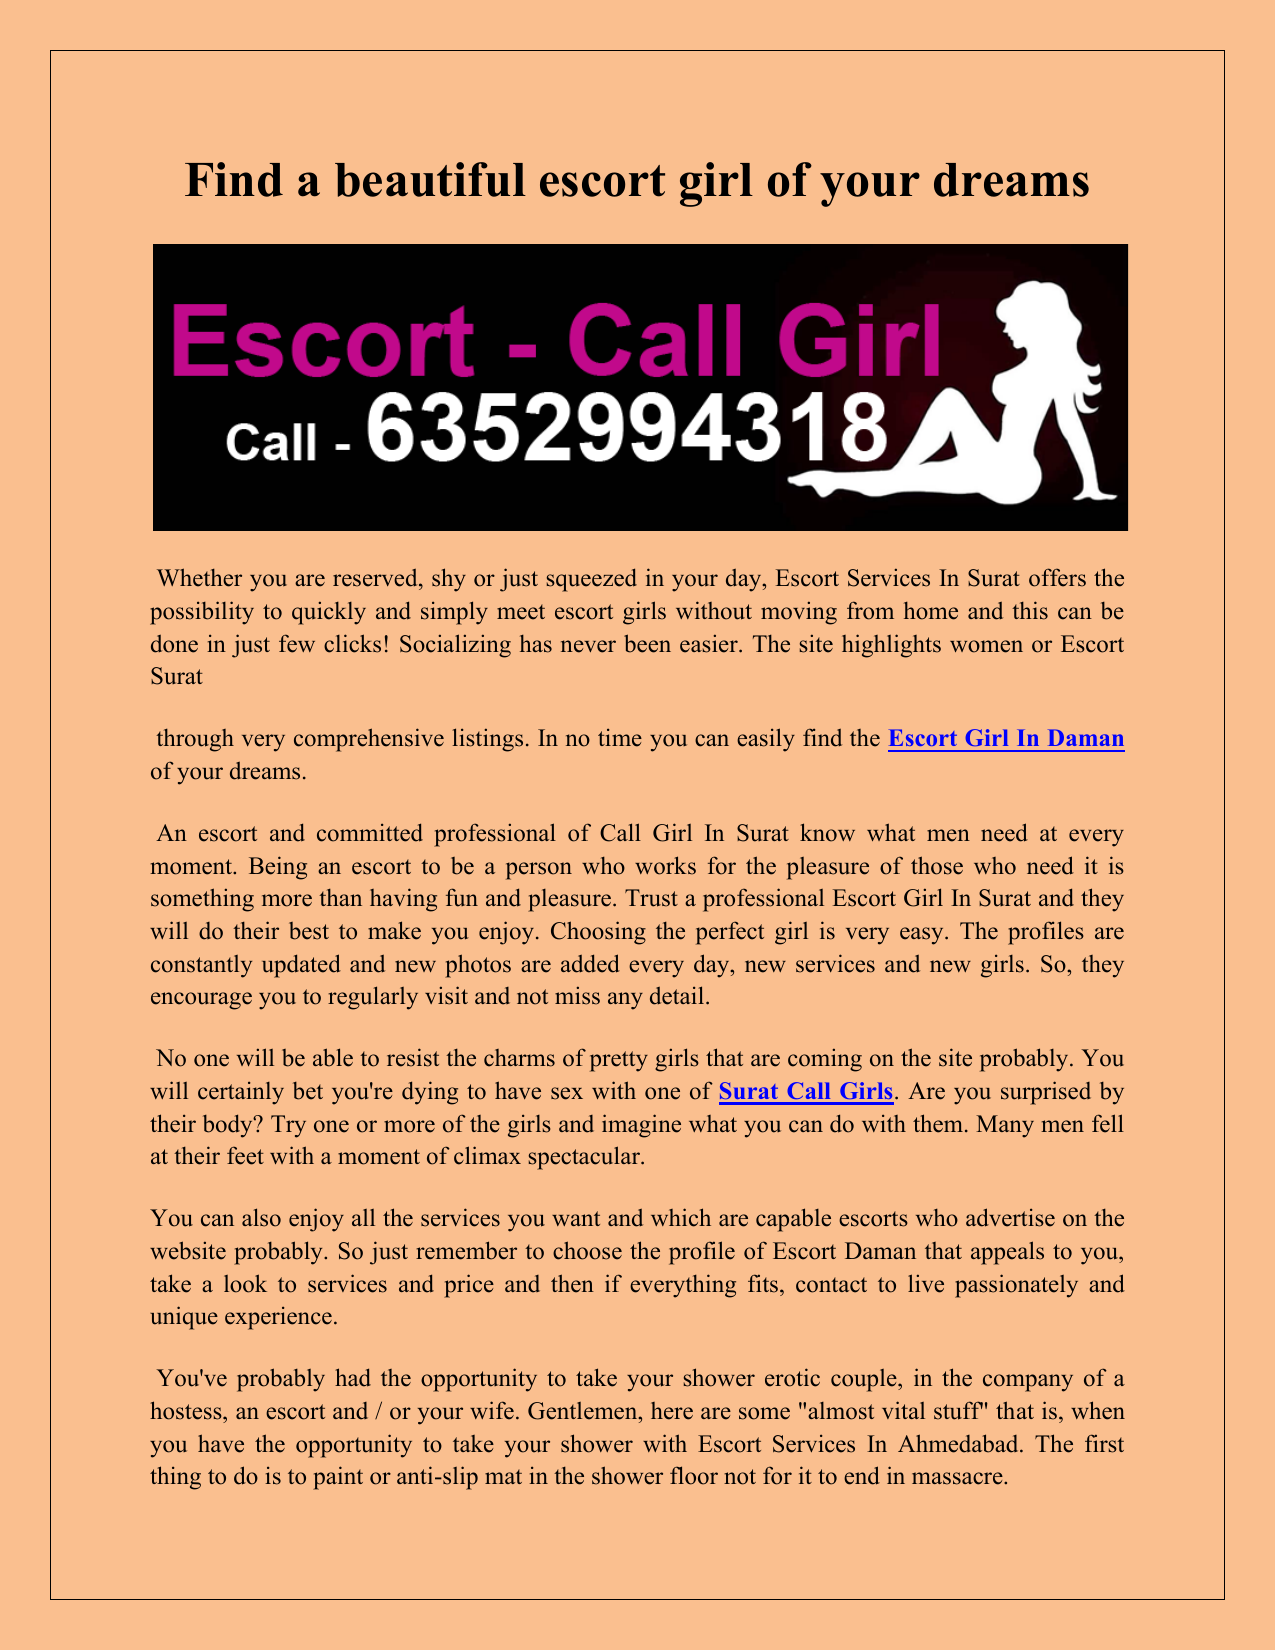 Girls having sex with girls in Surat